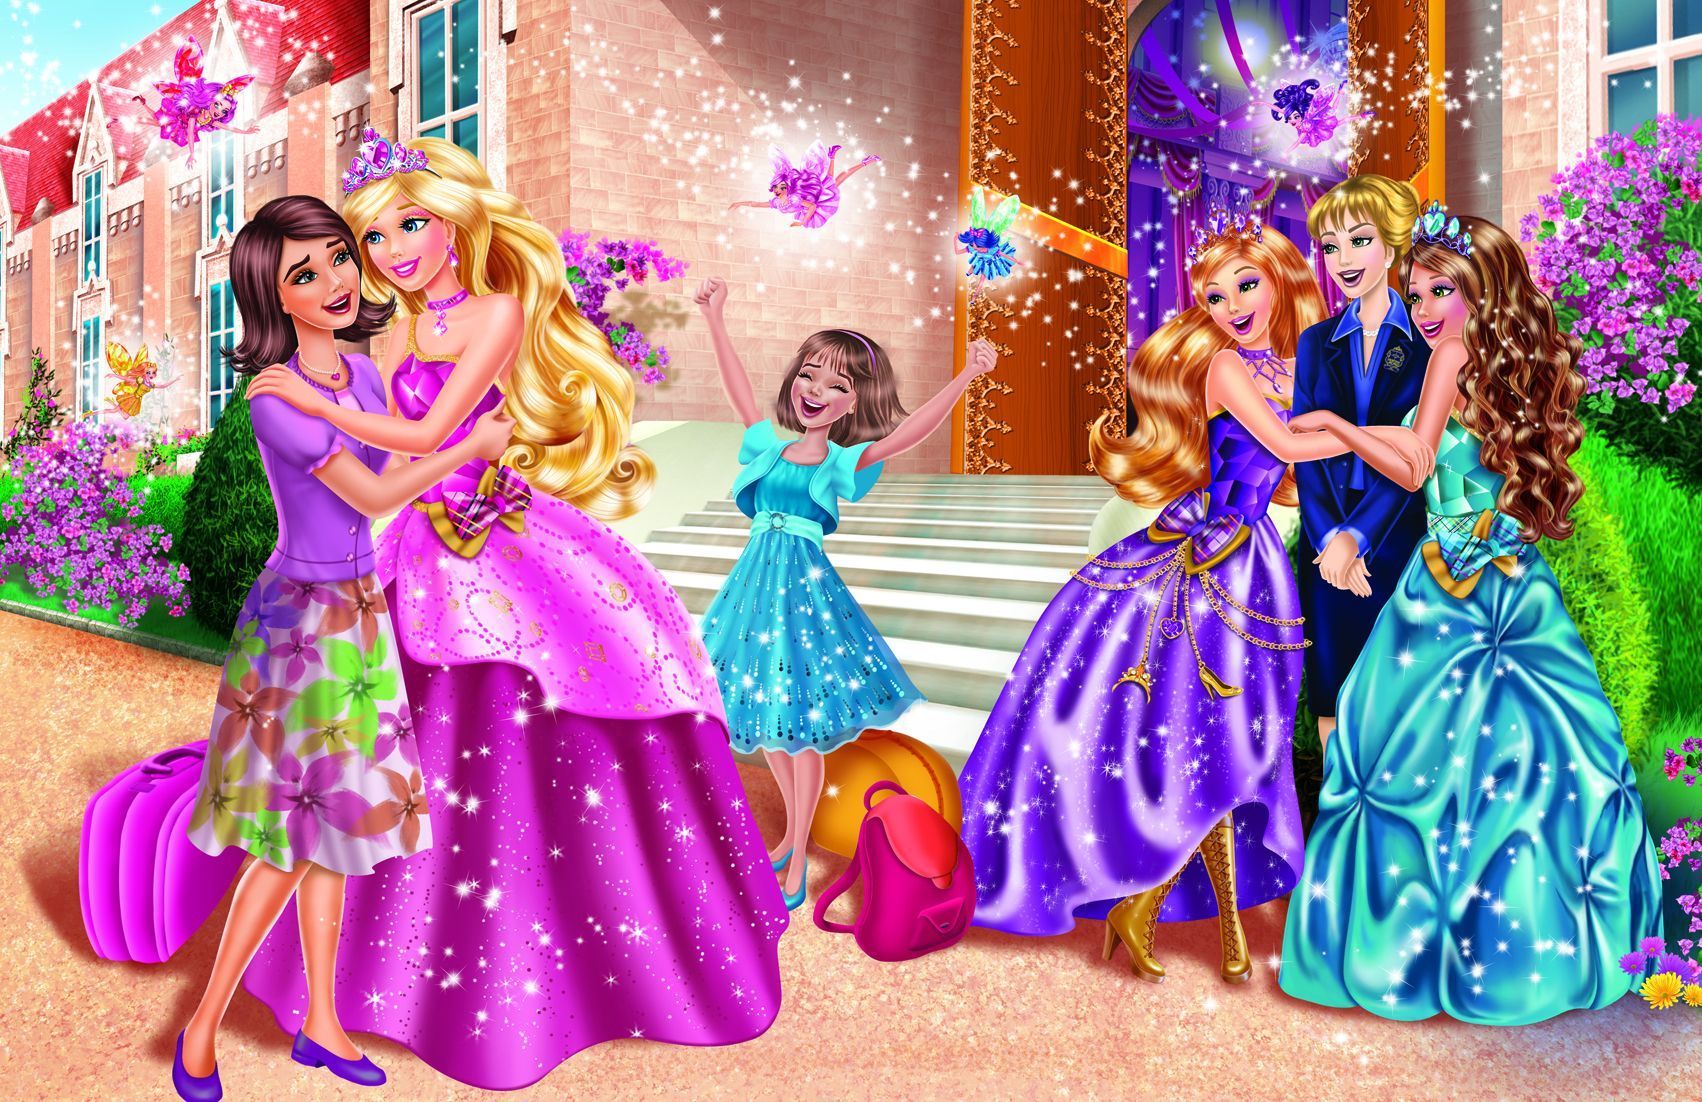 barbie princess cartoon